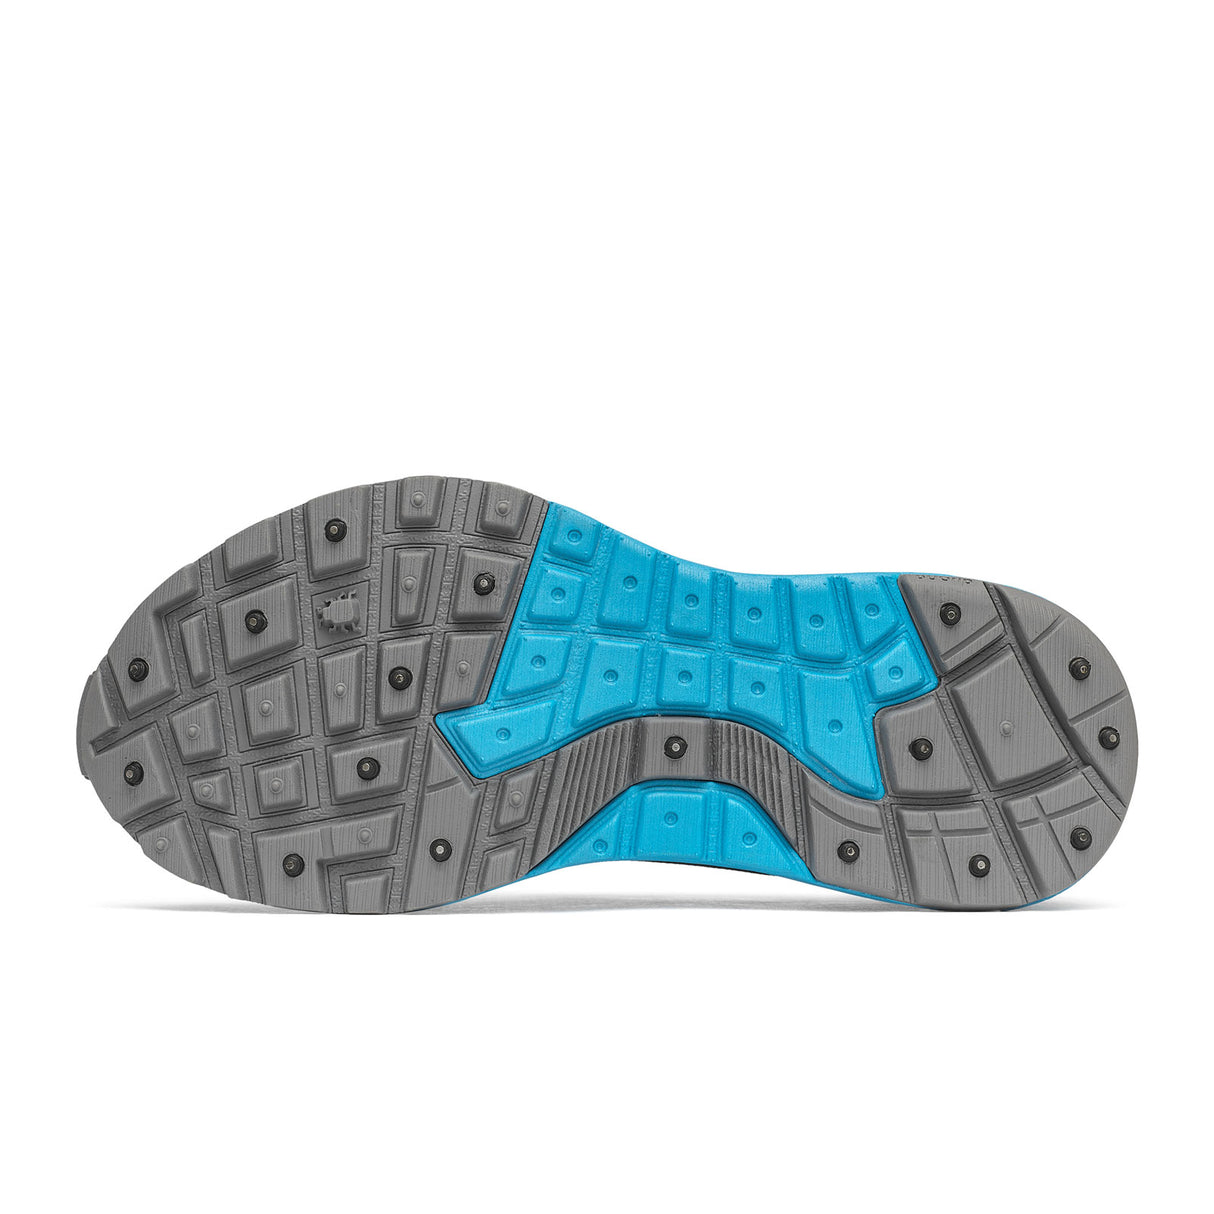 Icebug NewRun BUGrip GTX Running Shoe (Women) - Mist Blue/Aqua with Studs Athletic - Running - The Heel Shoe Fitters